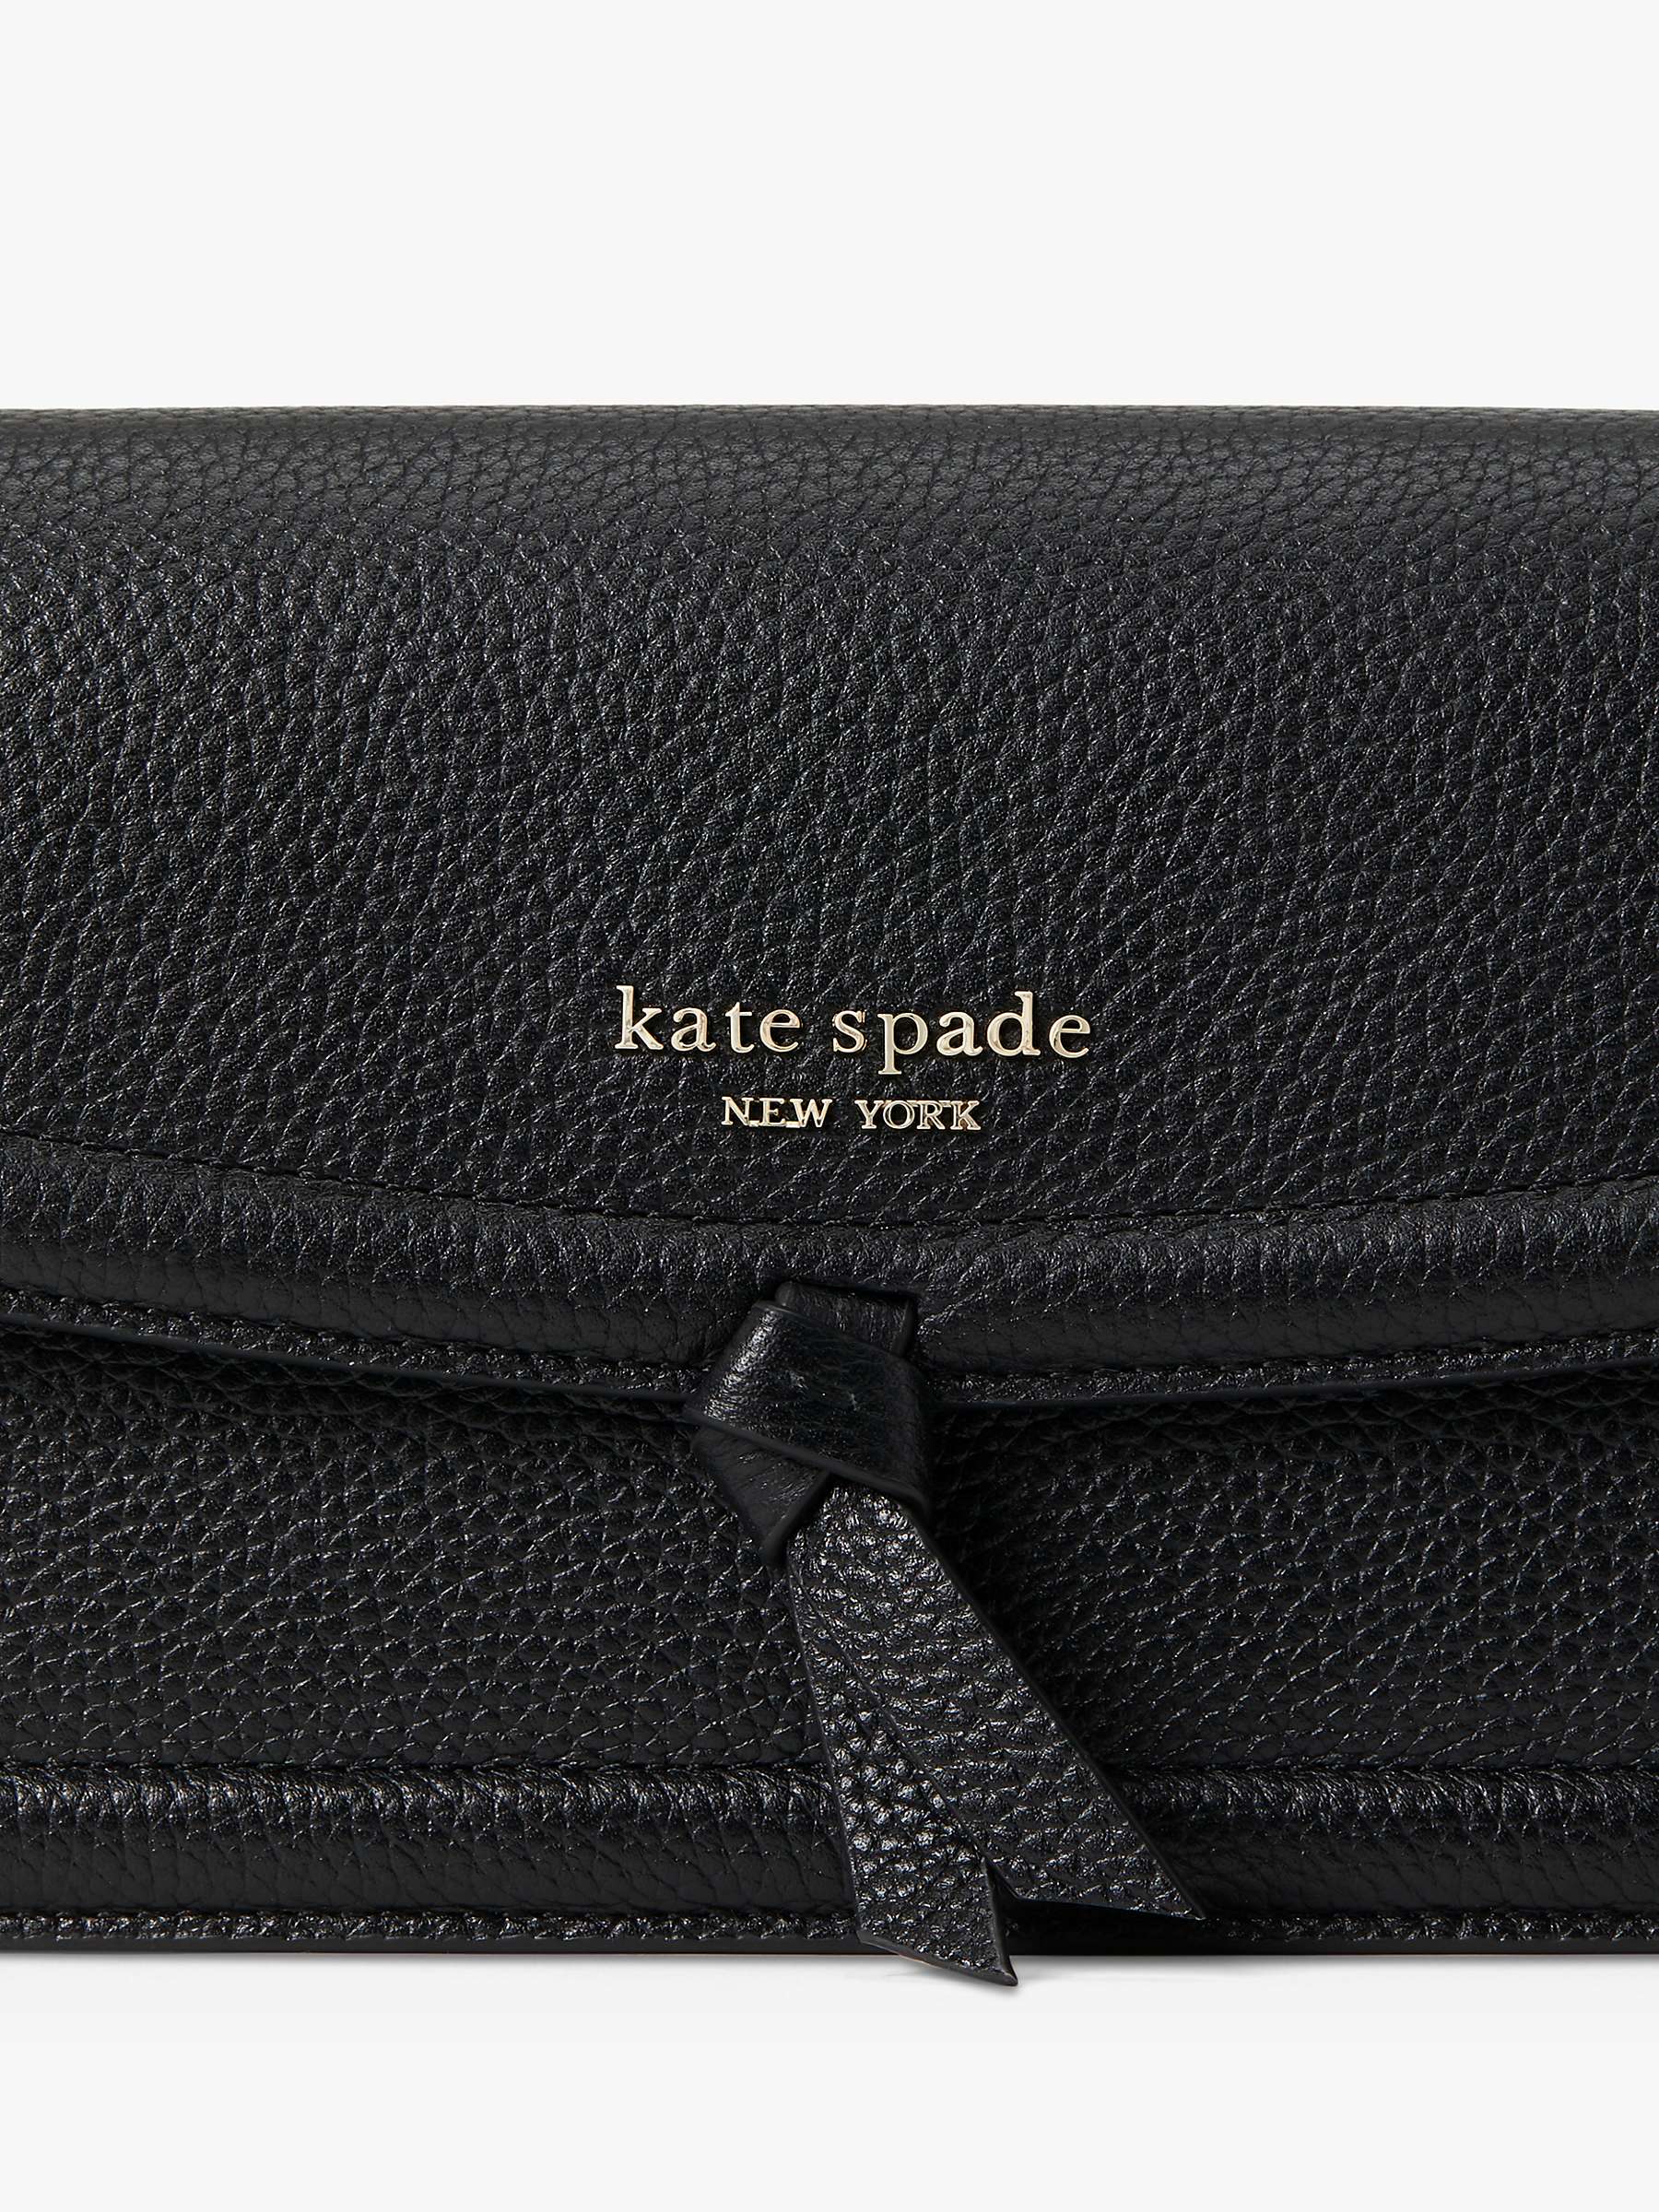 Buy kate spade new york Knott Leather Chain Cross Body Bag Online at johnlewis.com